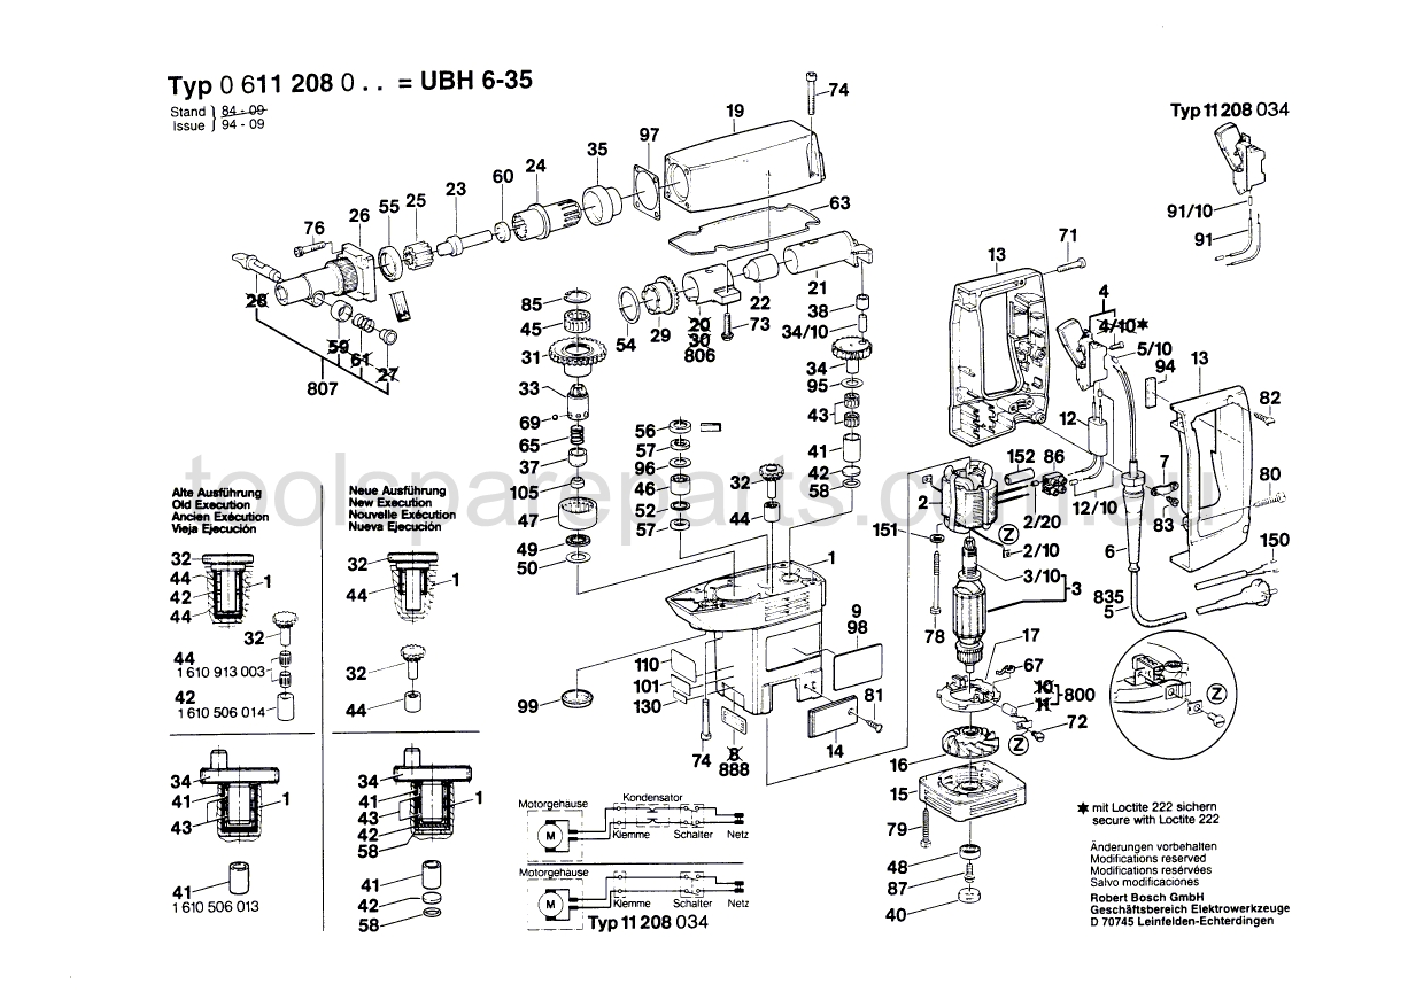 Bosch UBH 6/35 0611208037  Diagram 1